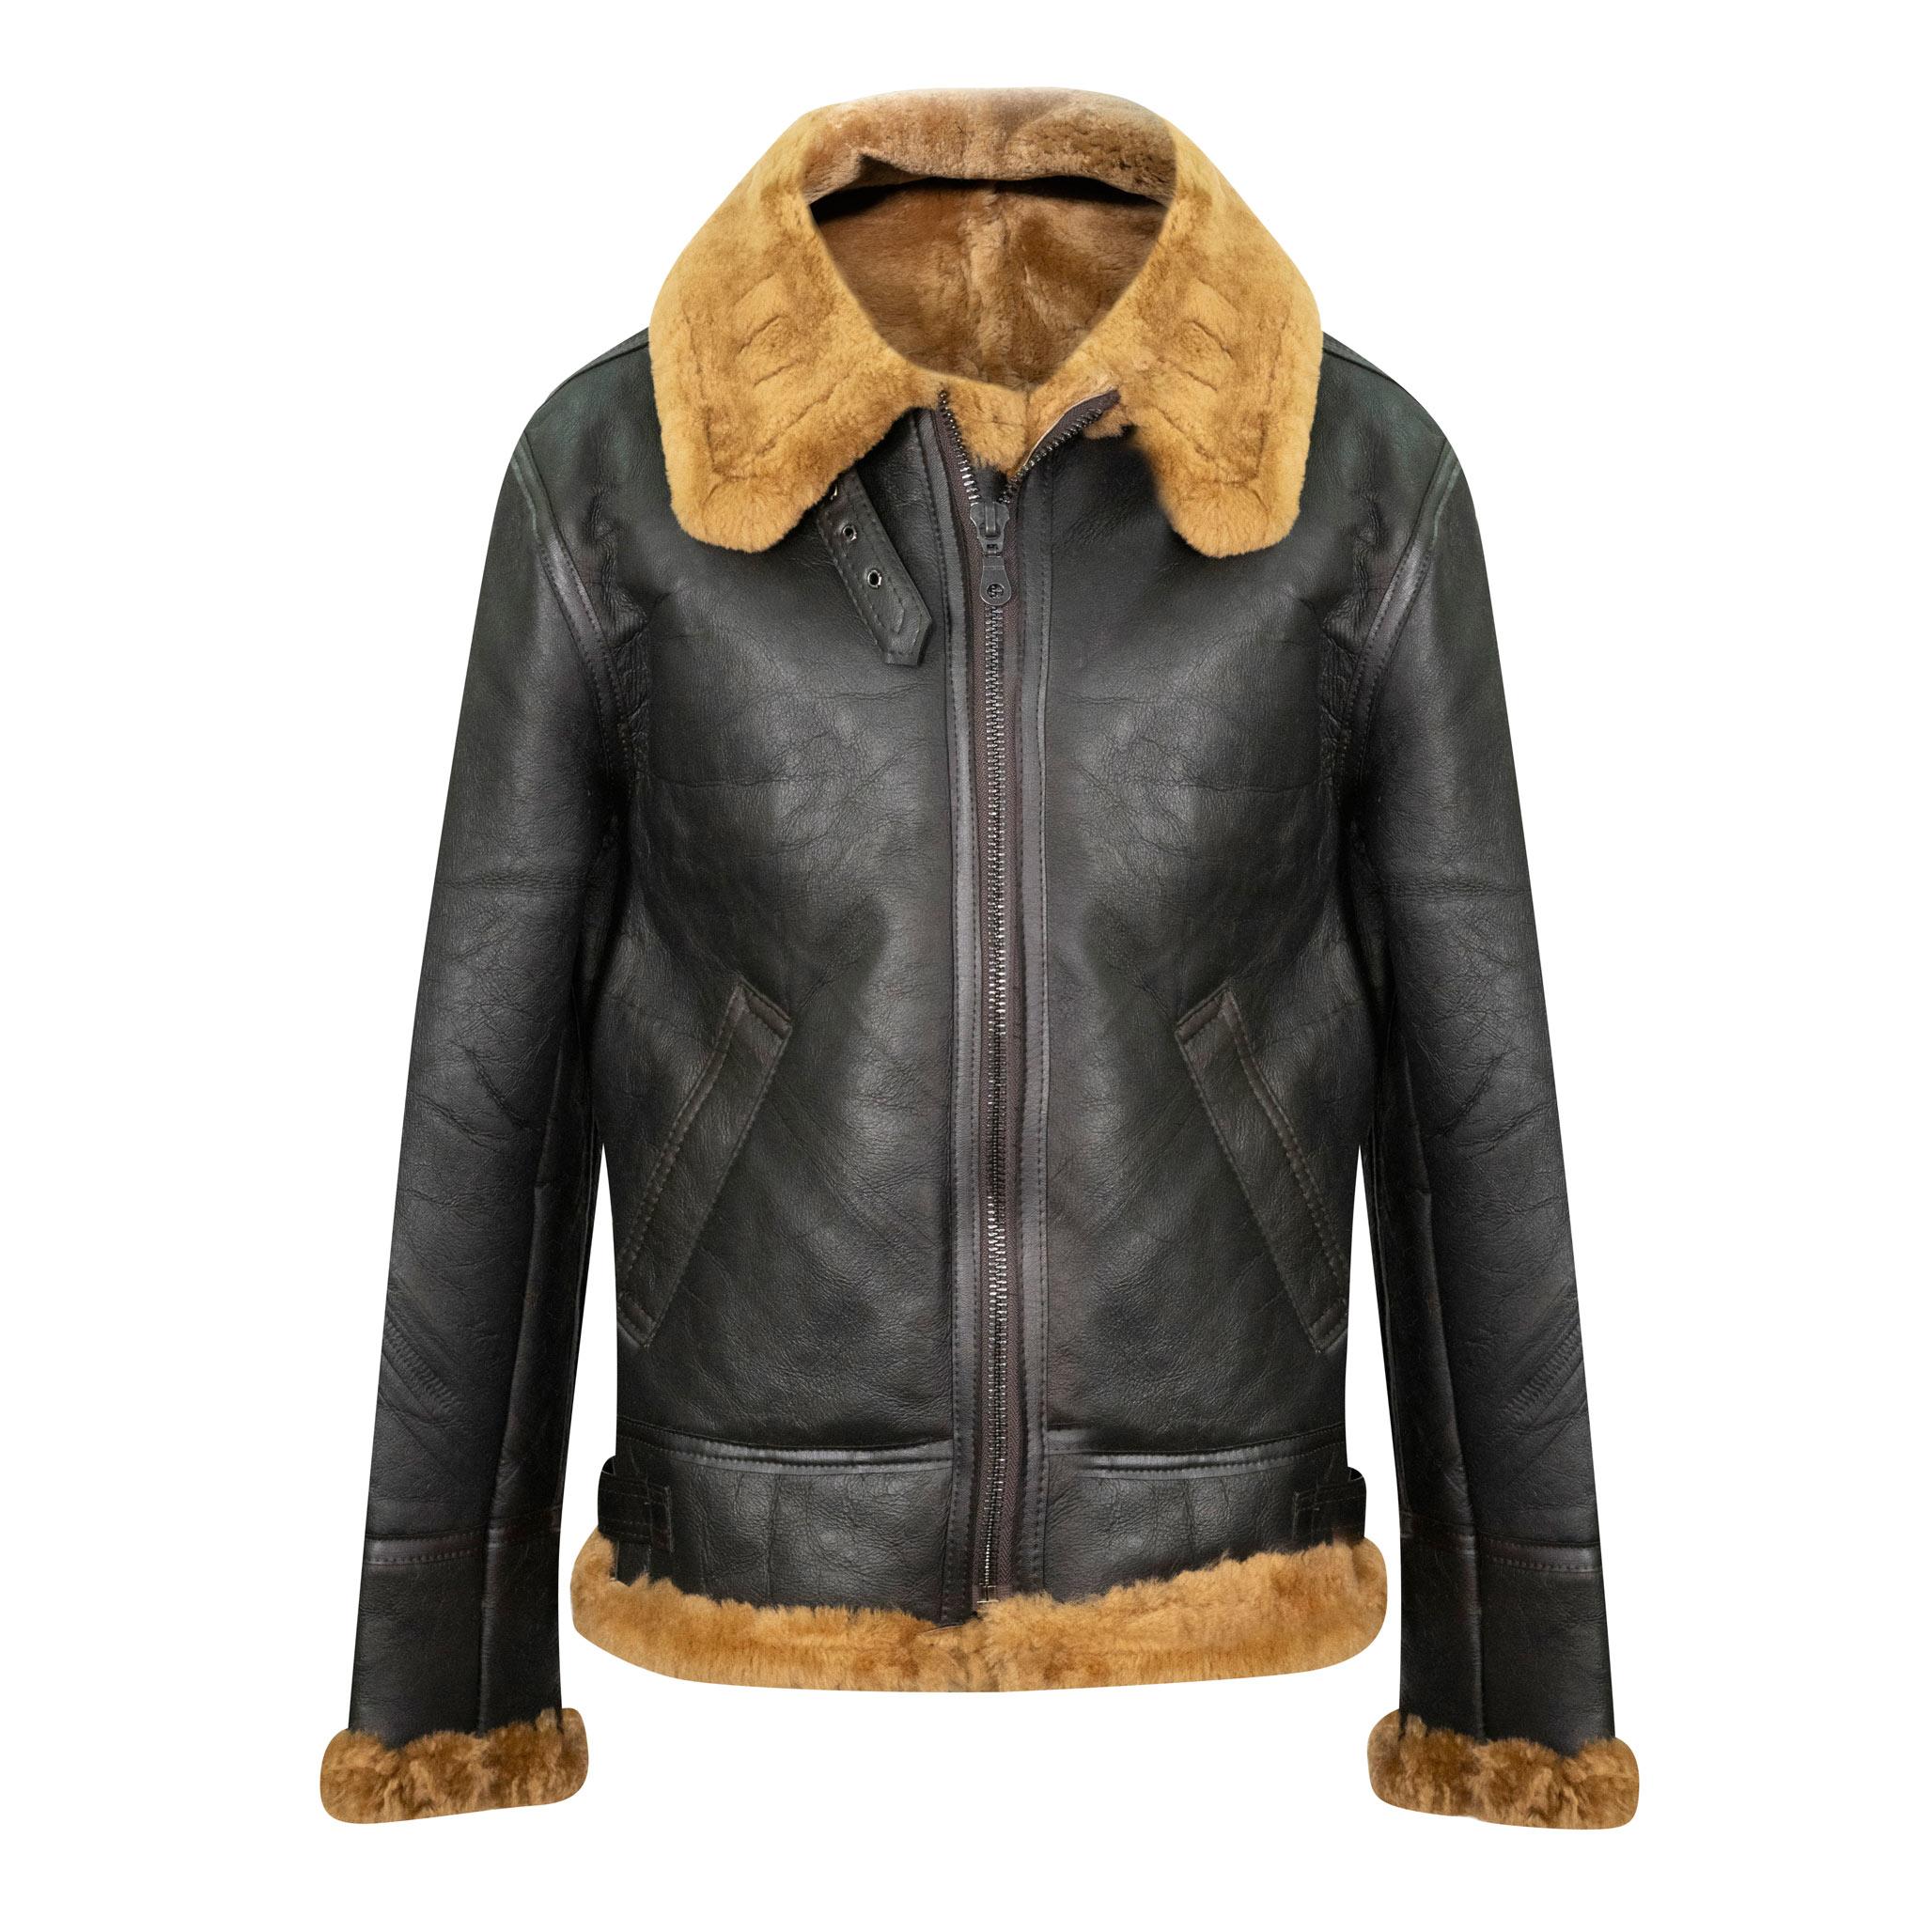 A brown sheepskin jacket with striking ginger fur.